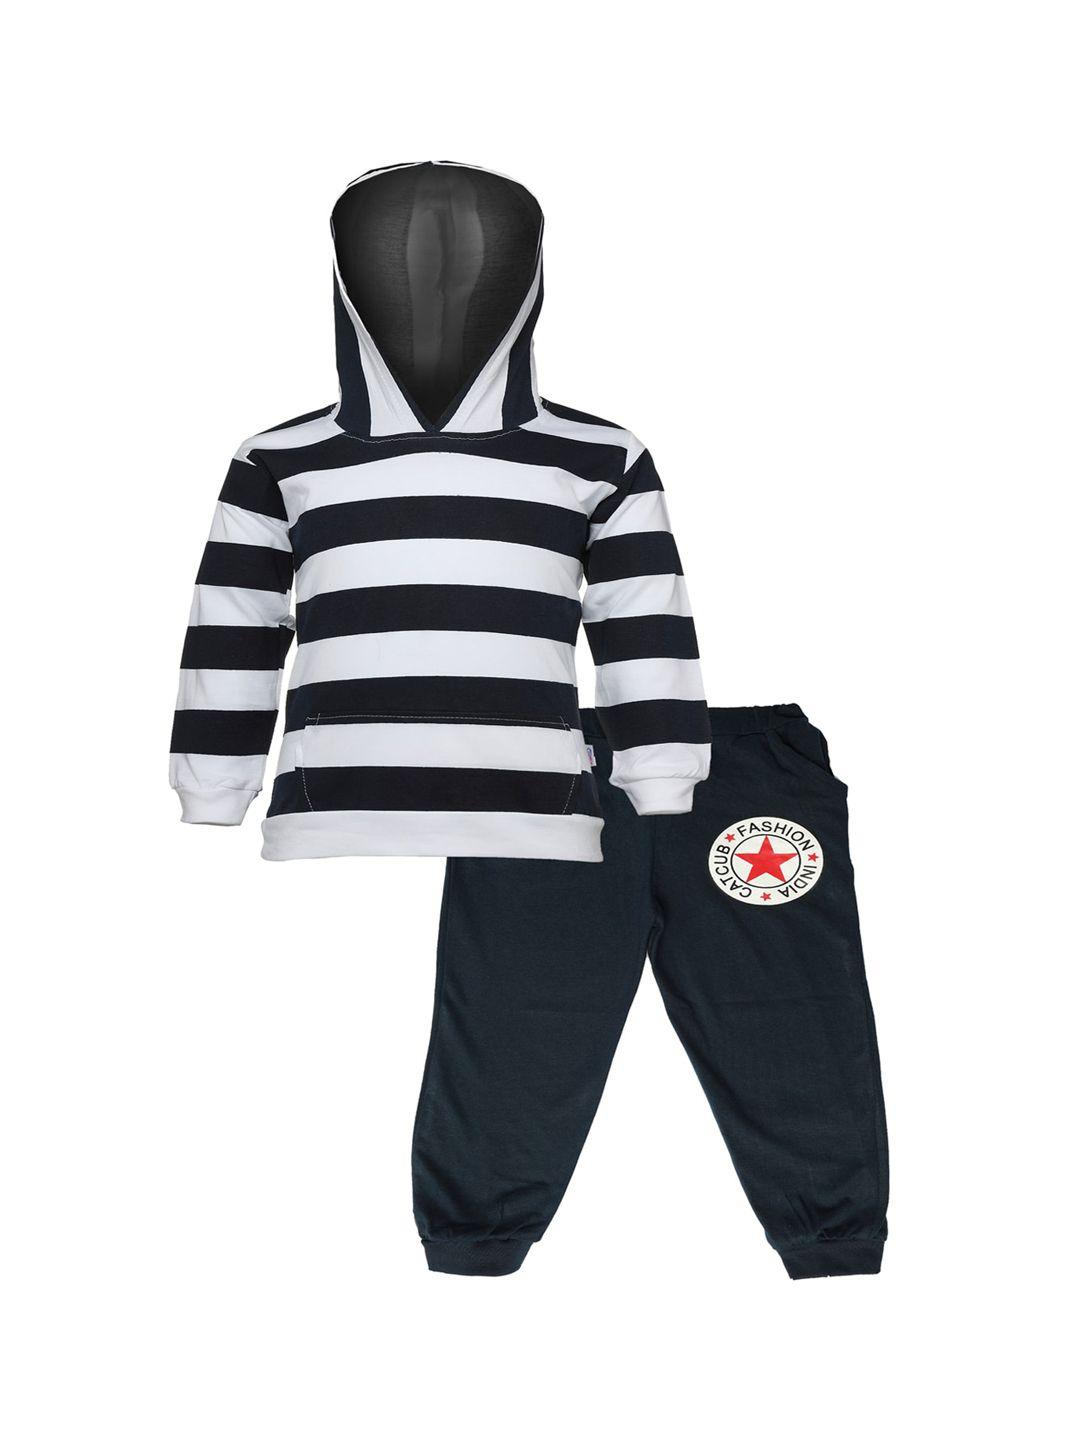 catcub unisex kids navy blue & white striped t-shirt with trouser